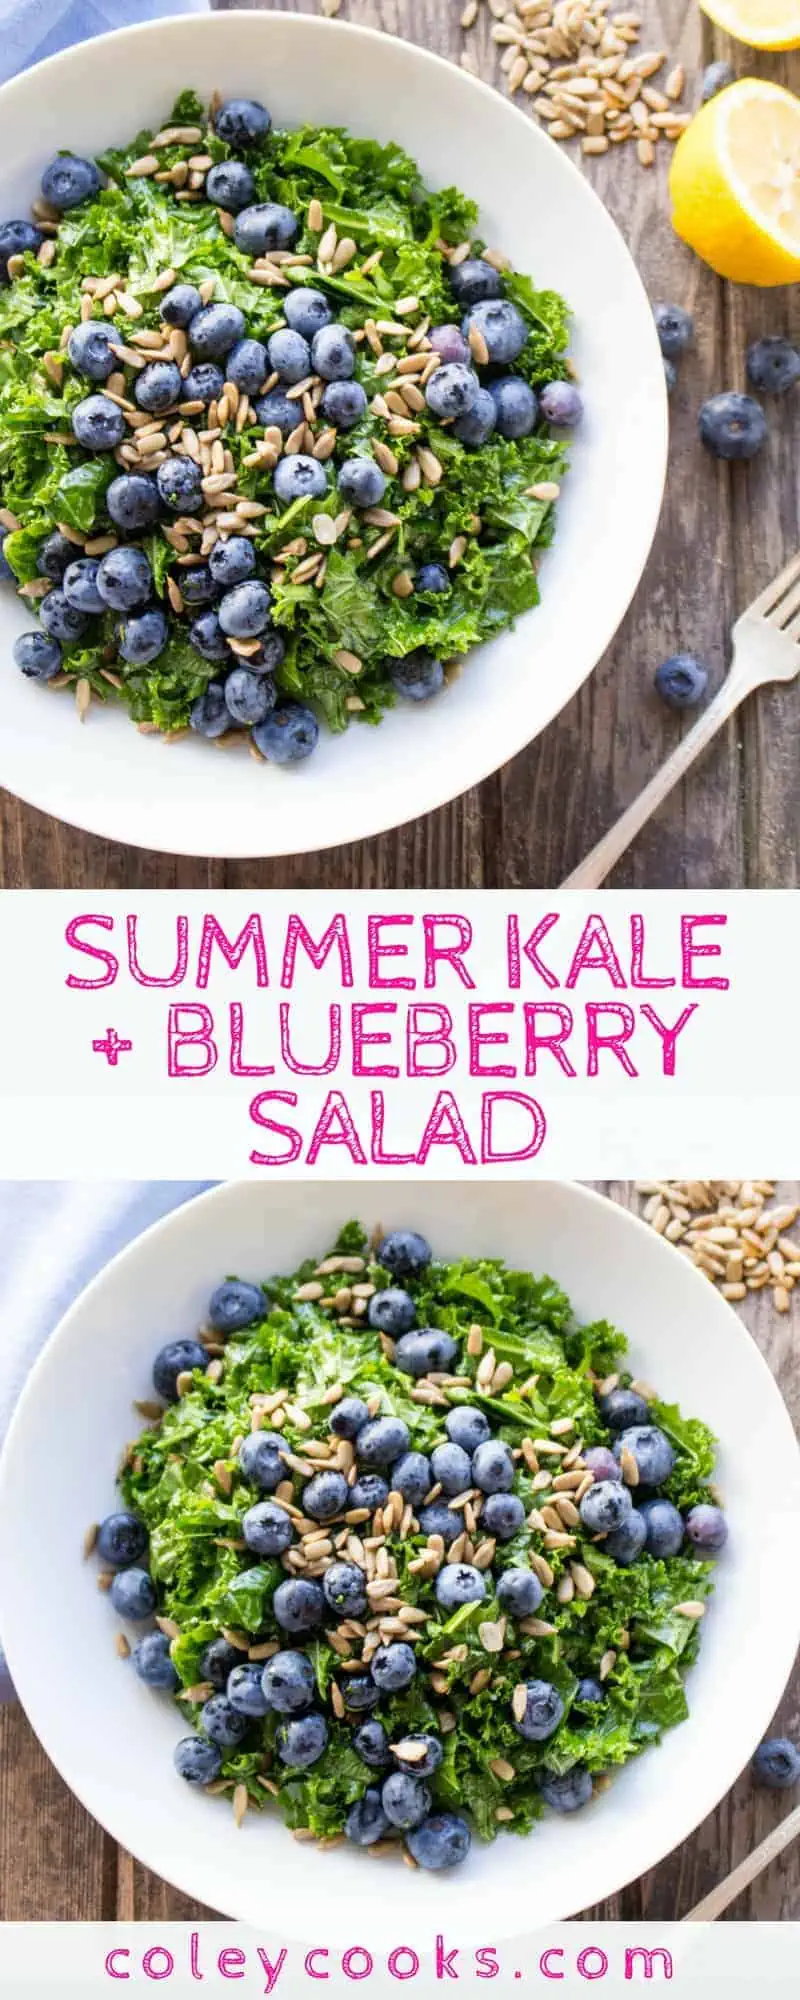 SUMMER KALE + BLUEBERRY SALAD | Easiest ever summer salad recipe with a simple honey lemon vinaigrette, crunchy sunflower seeds, sweet blueberries and massaged kale! #glutenfree #vegan #plantbased #paleo | ColeyCooks.com